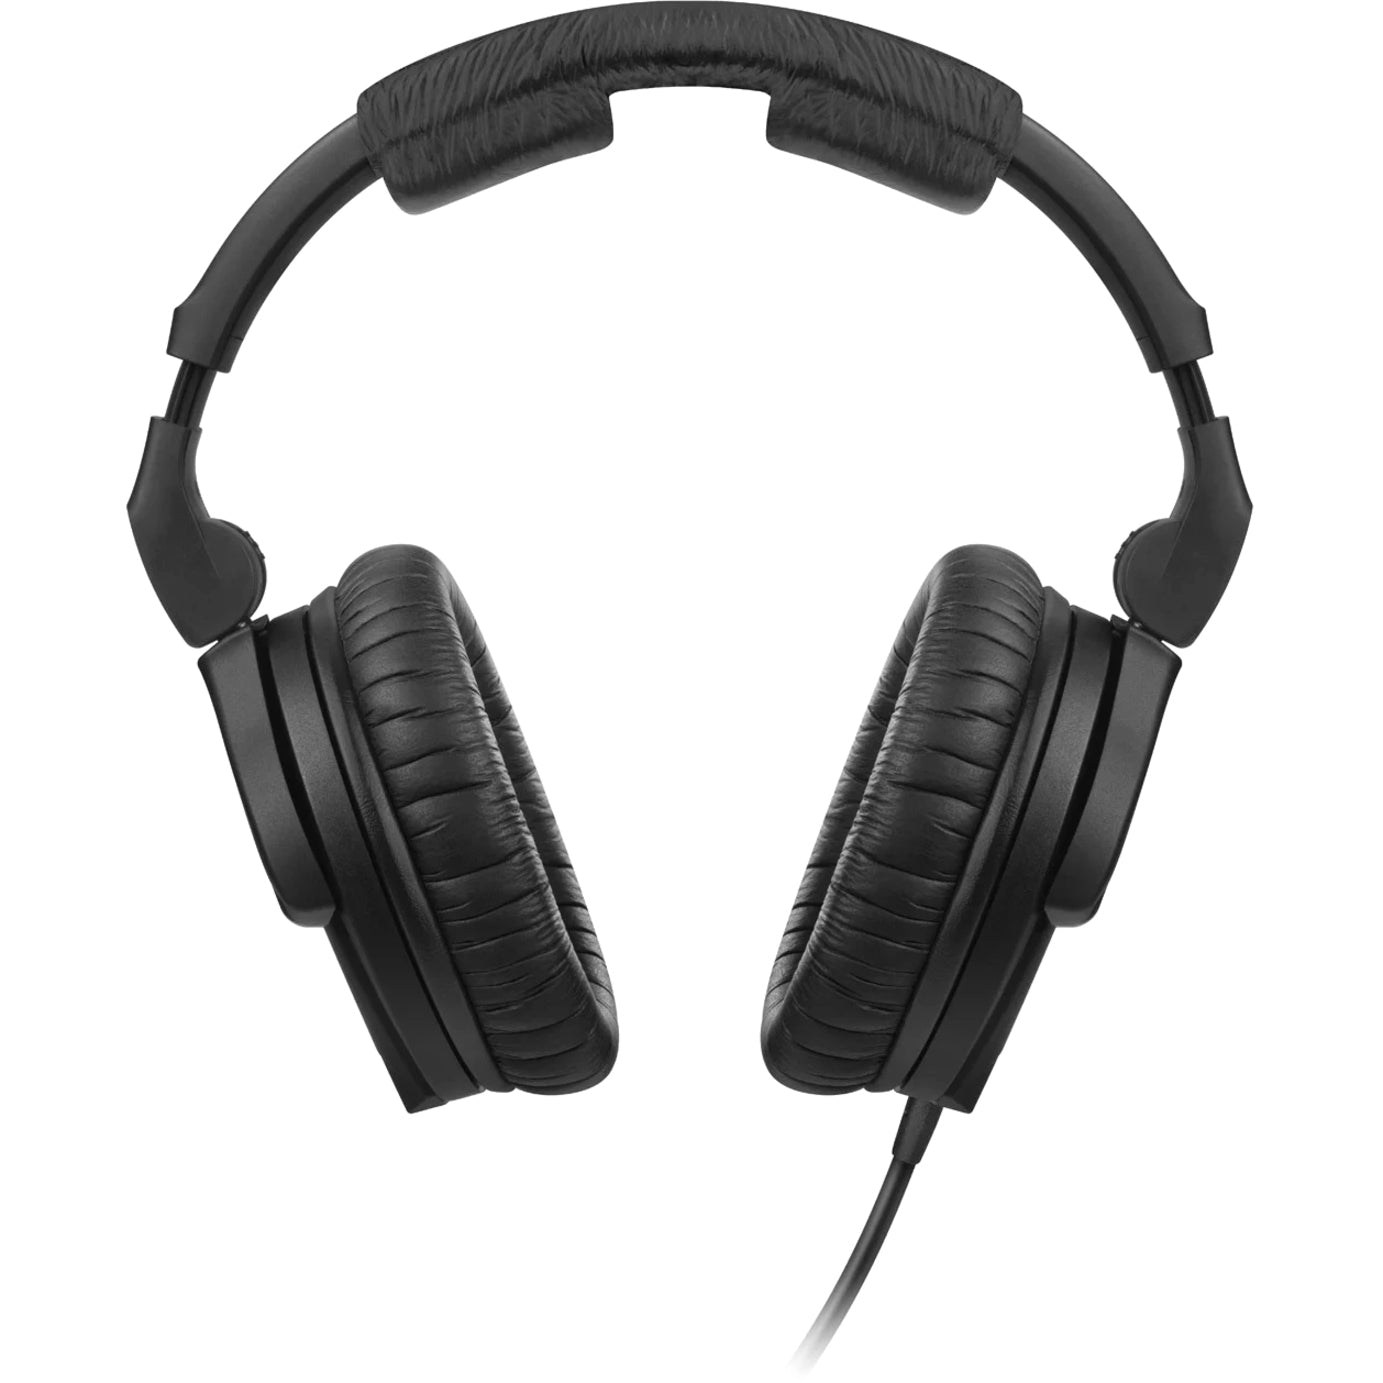 Sennheiser 506845 HD 280 PRO Professional Monitoring Headphone, Closed-back, Rotating Ear Cup, Foldable, Noise Attenuation